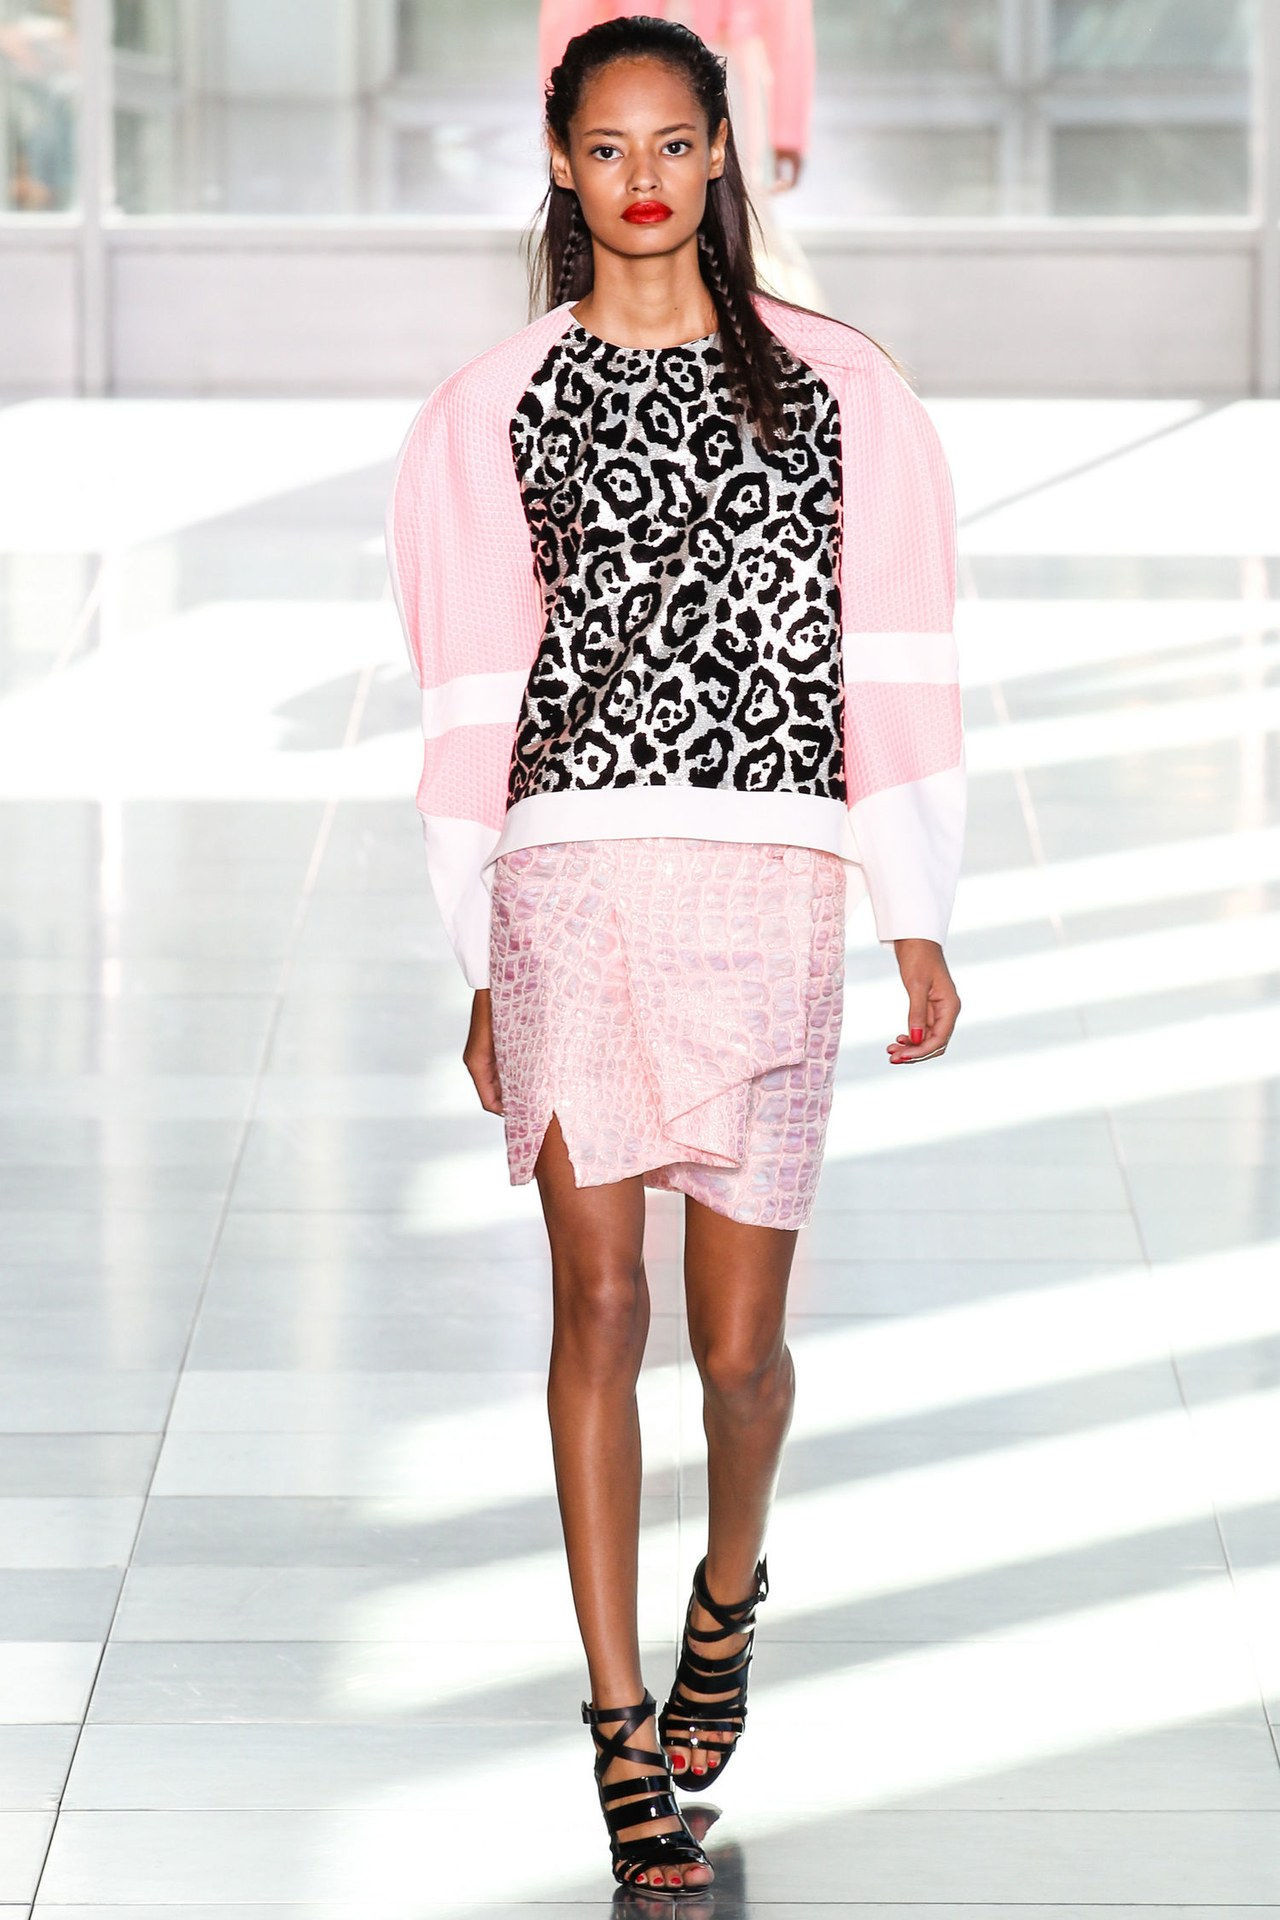 安东尼奥 berardi spring 2014 pink leopard print top